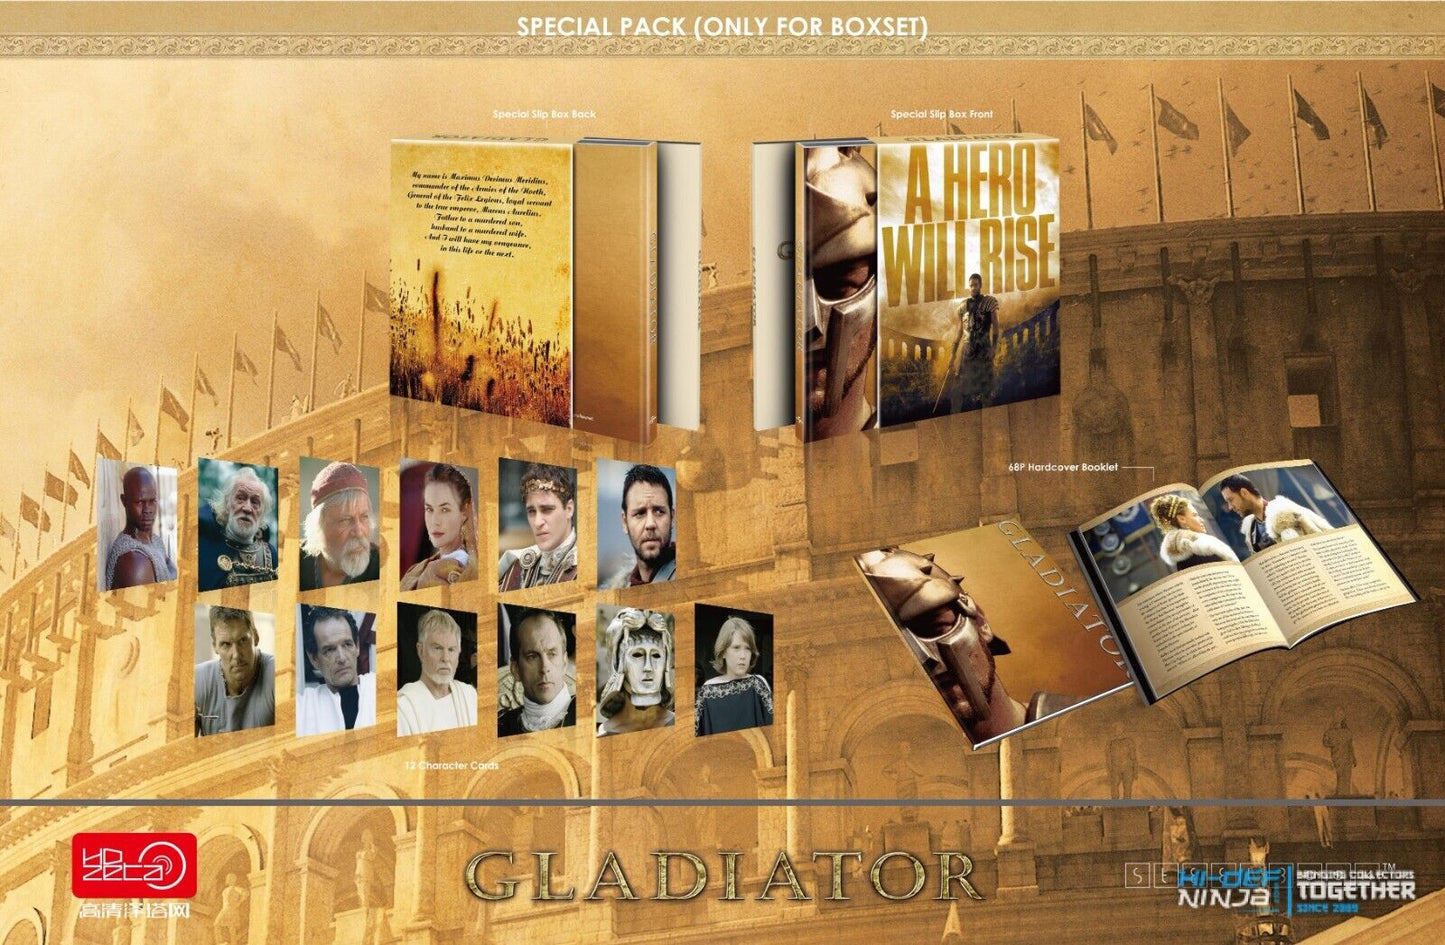 Gladiator 4K Blu-ray Steelbook HDzeta Exclusive Gold Label One Click Box Set